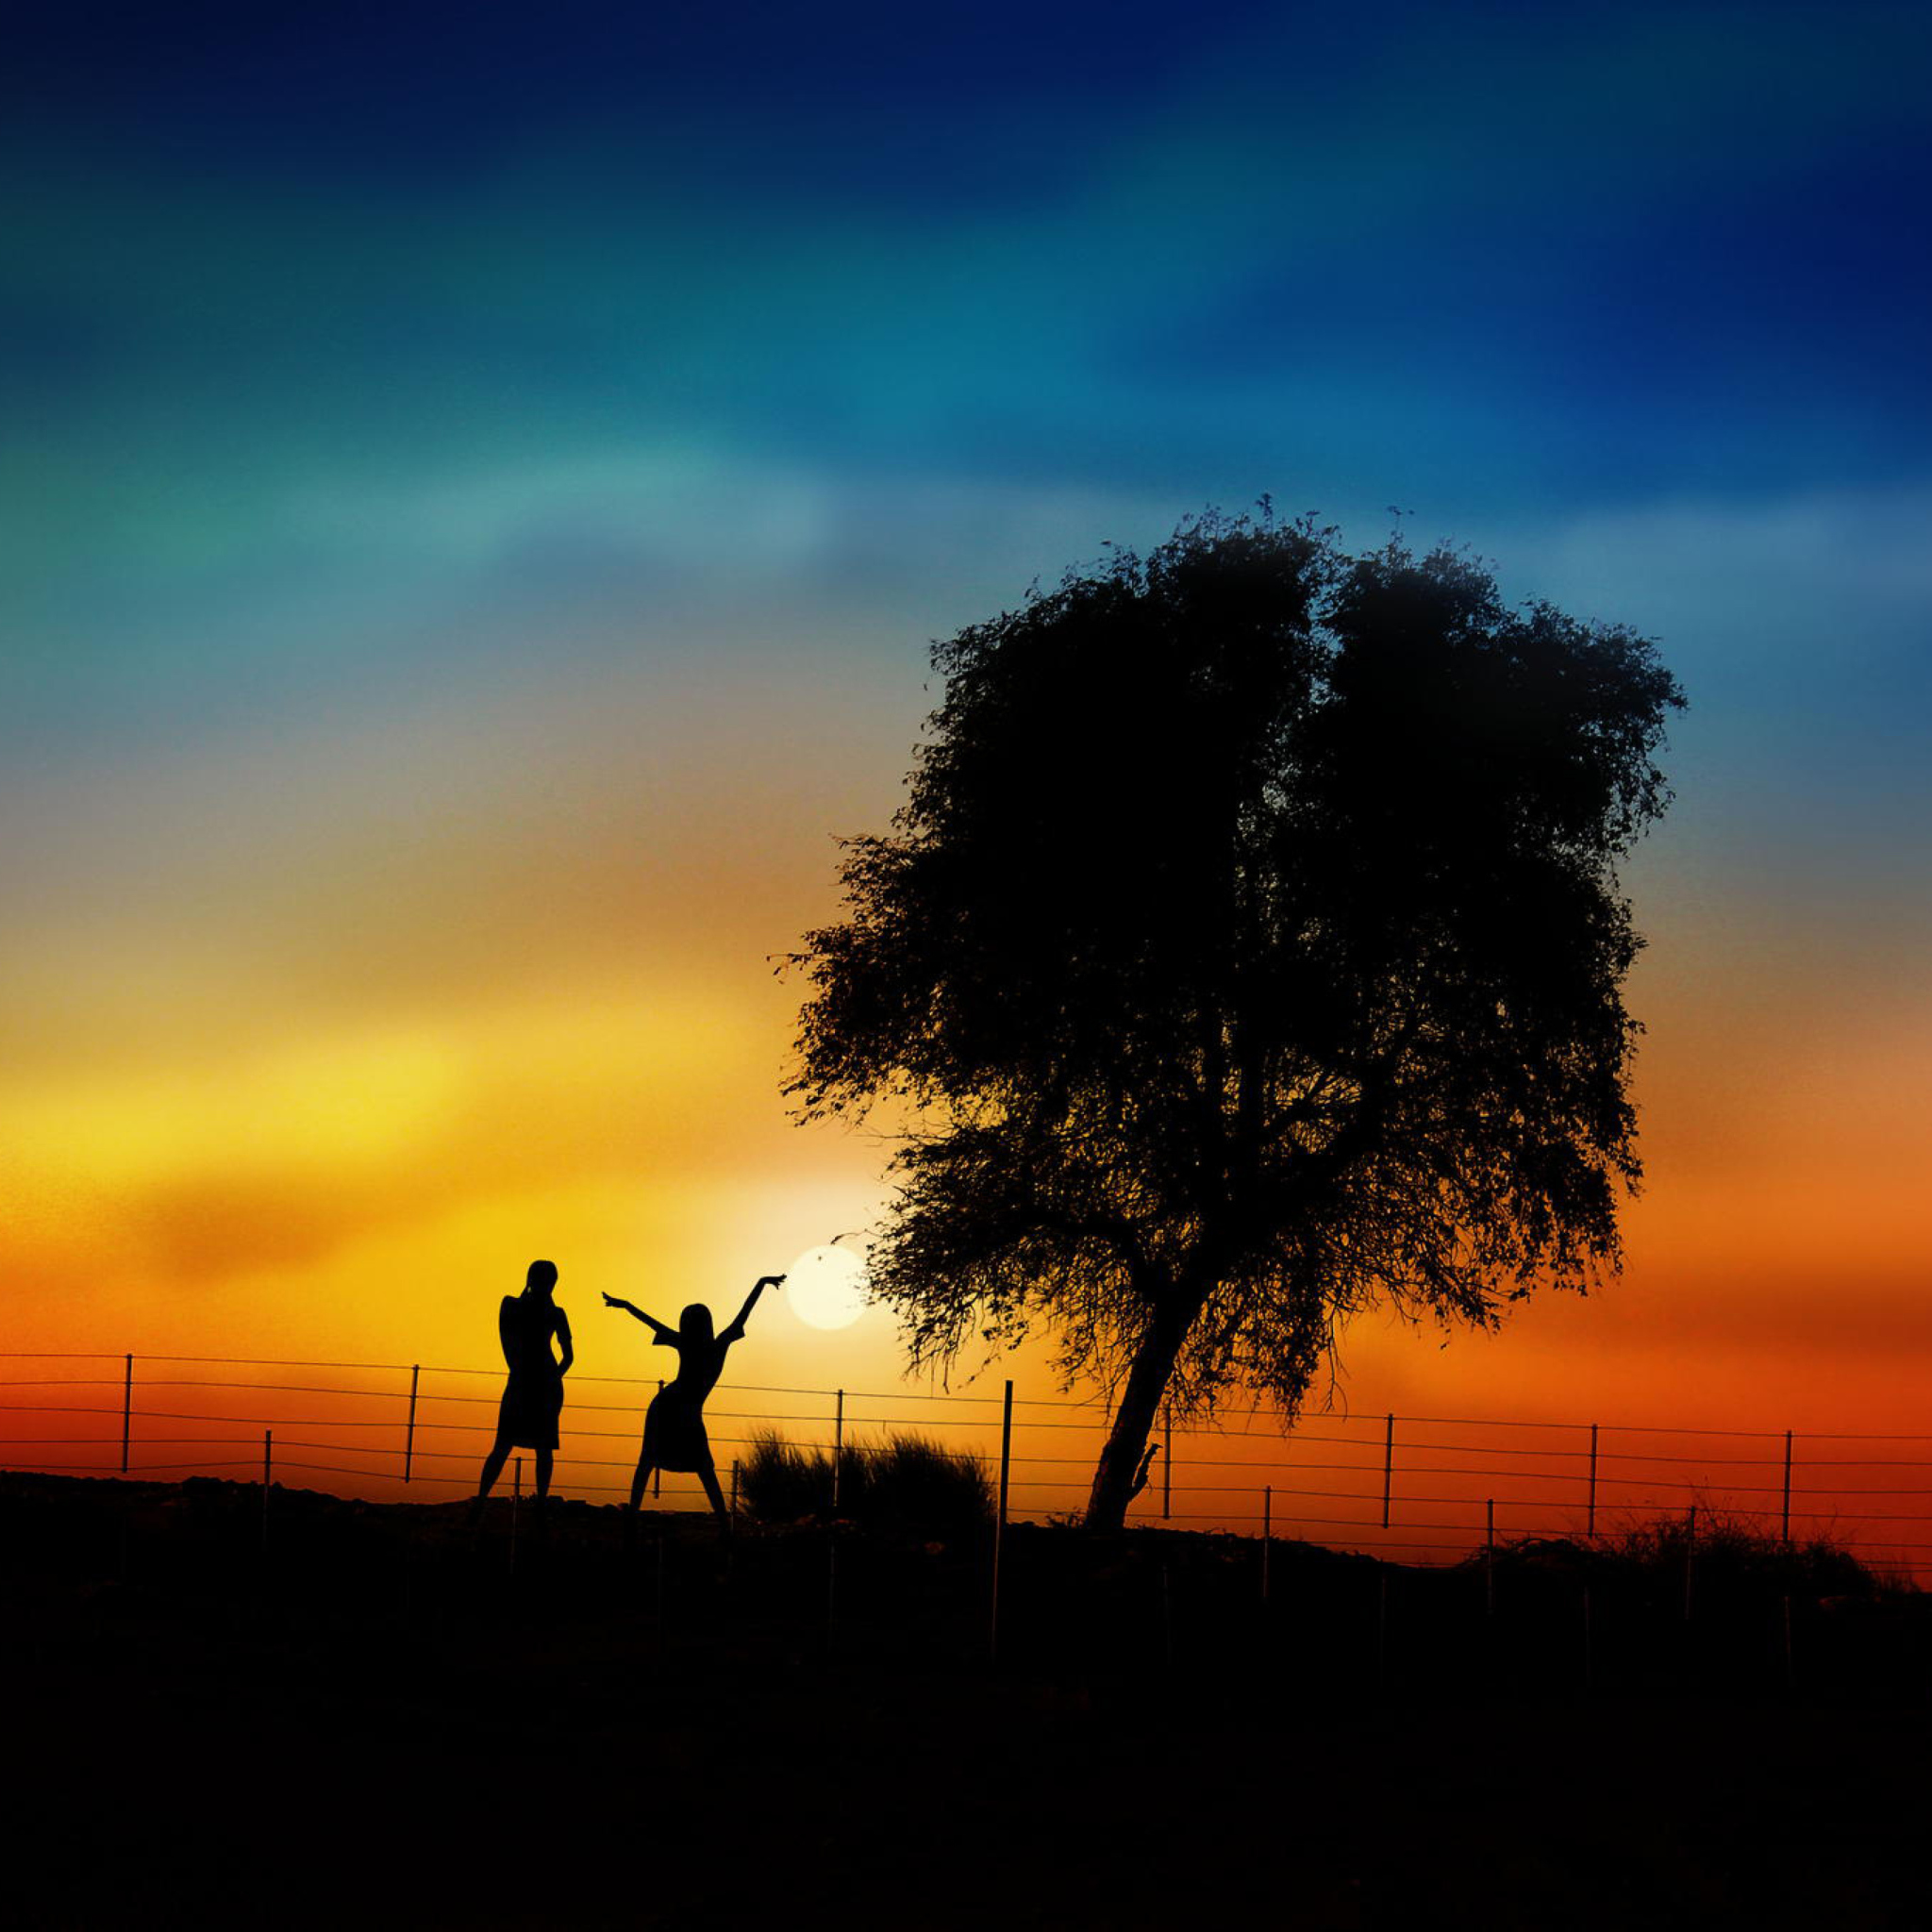 Обои Couple Silhouettes Under Tree At Sunset 2048x2048